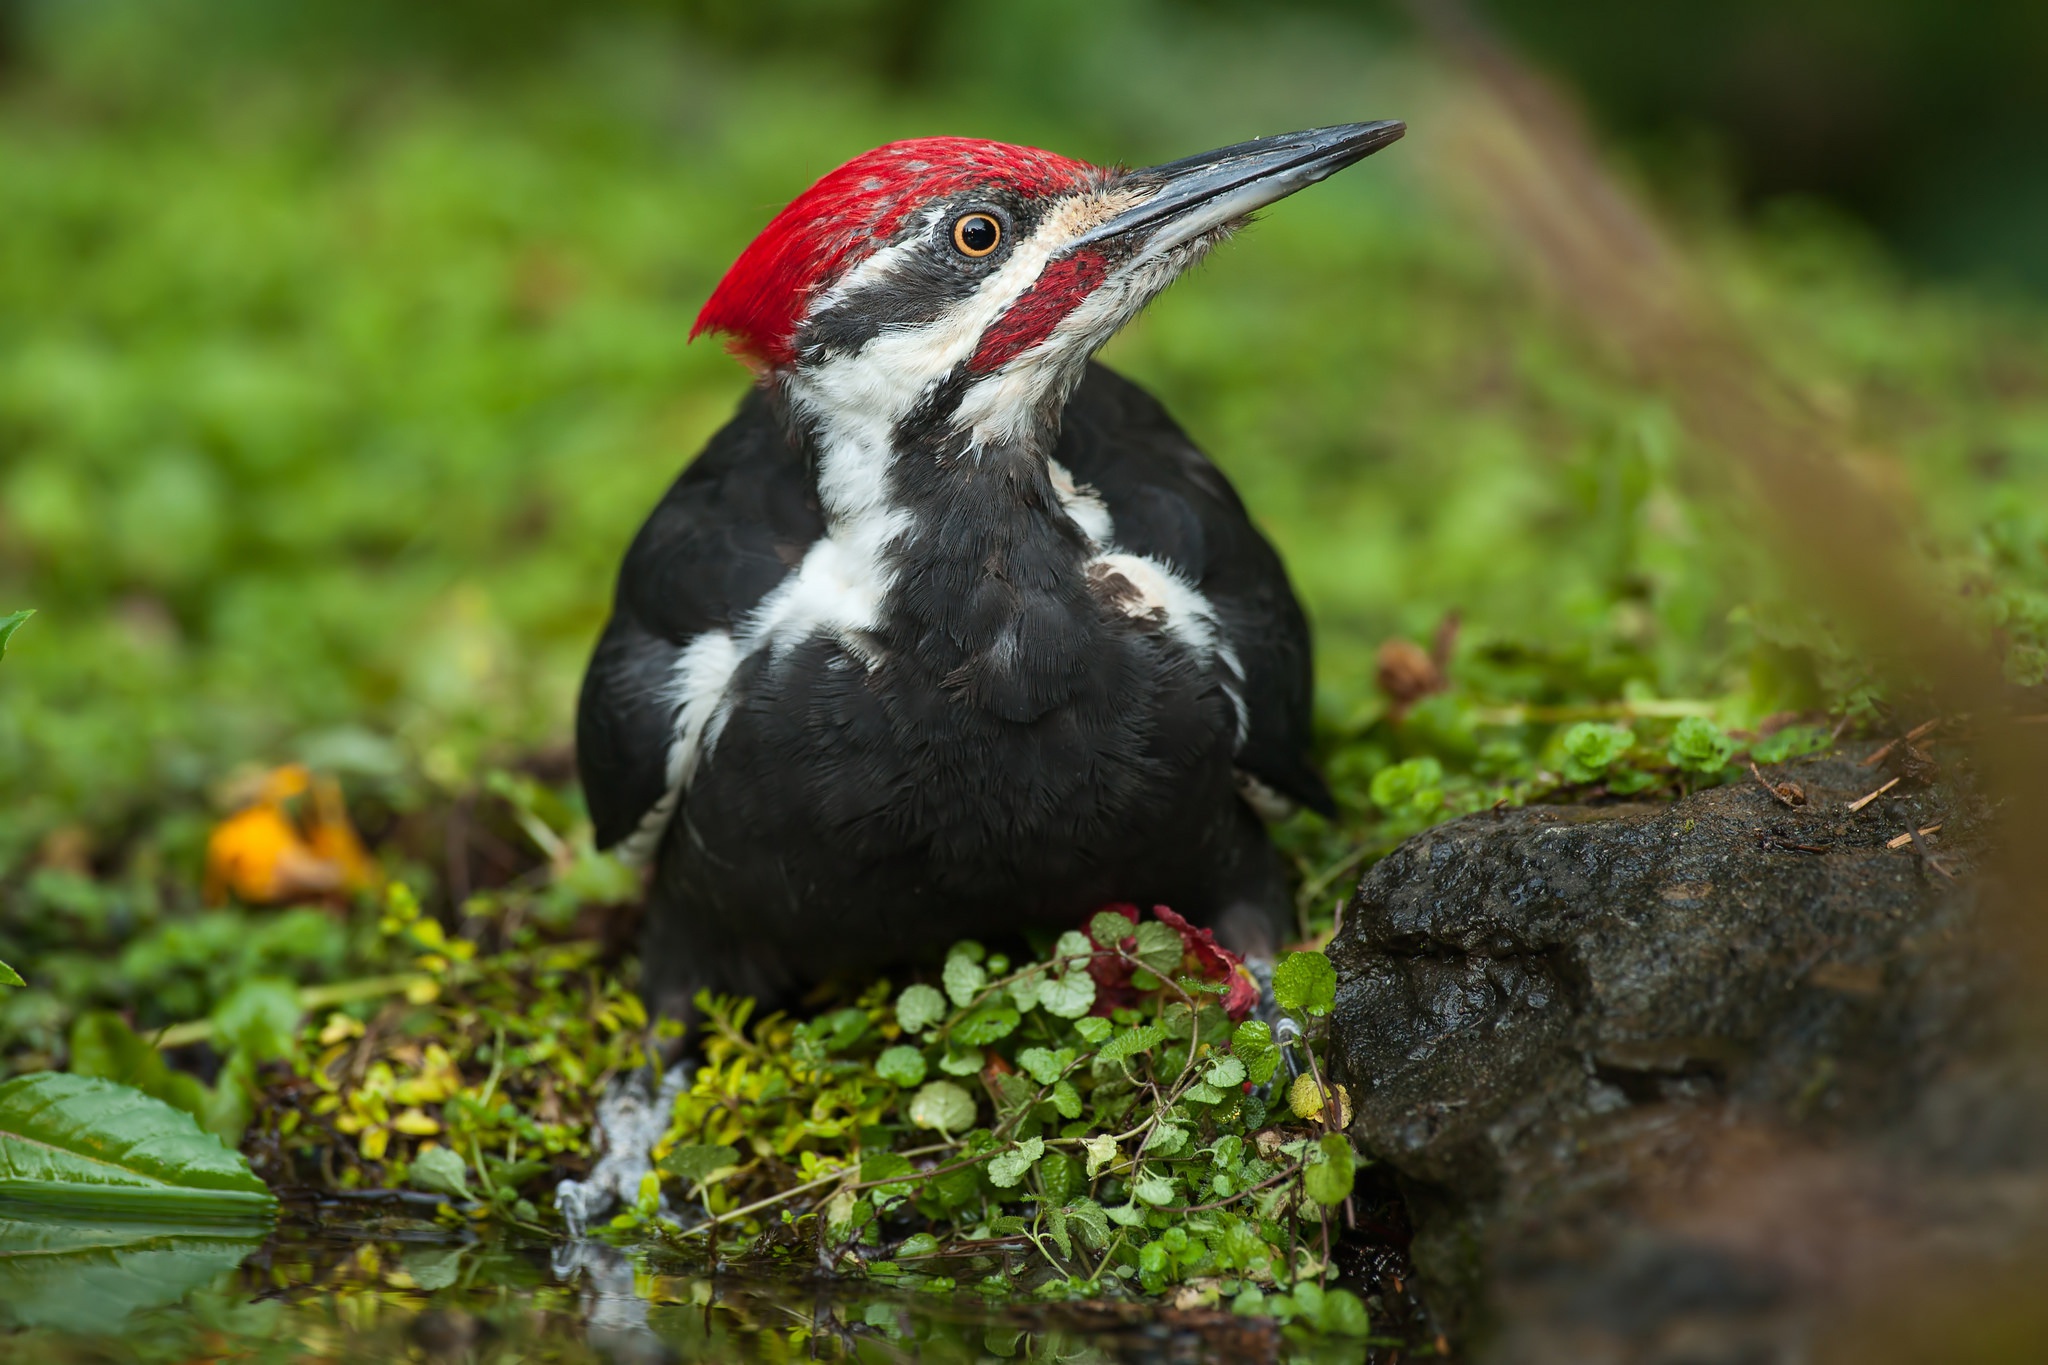 General 2048x1365 animals nature birds woodpeckers closeup depth of field leaves fur beak water